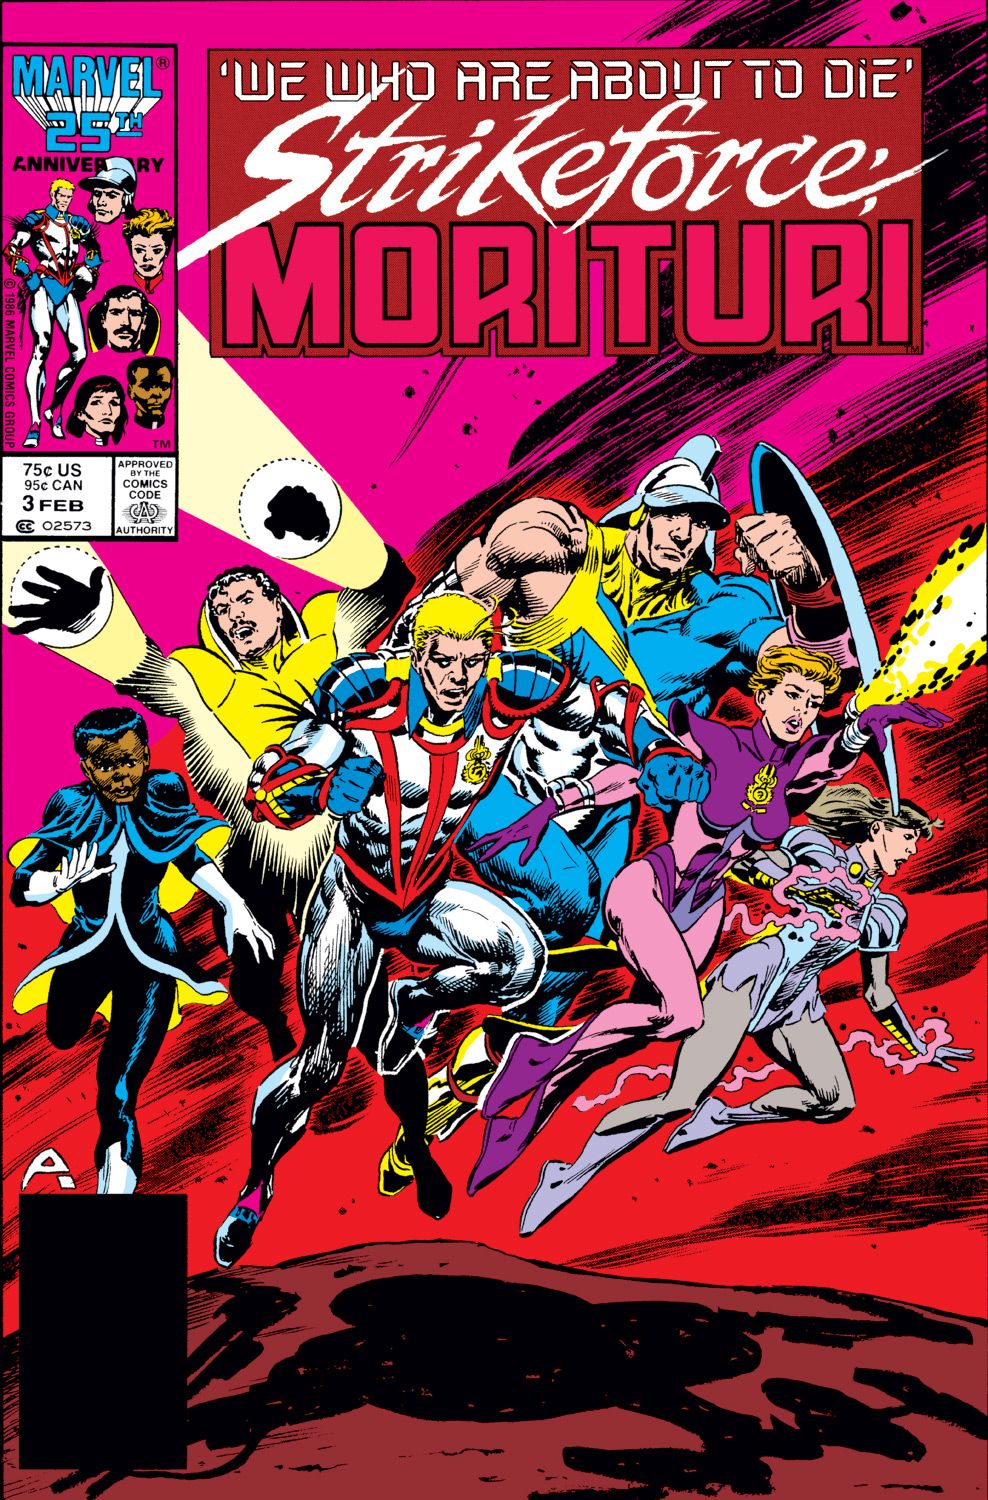 Strikeforce: Morituri #3 - Paths of Glory released by Marvel on February 1, 1987